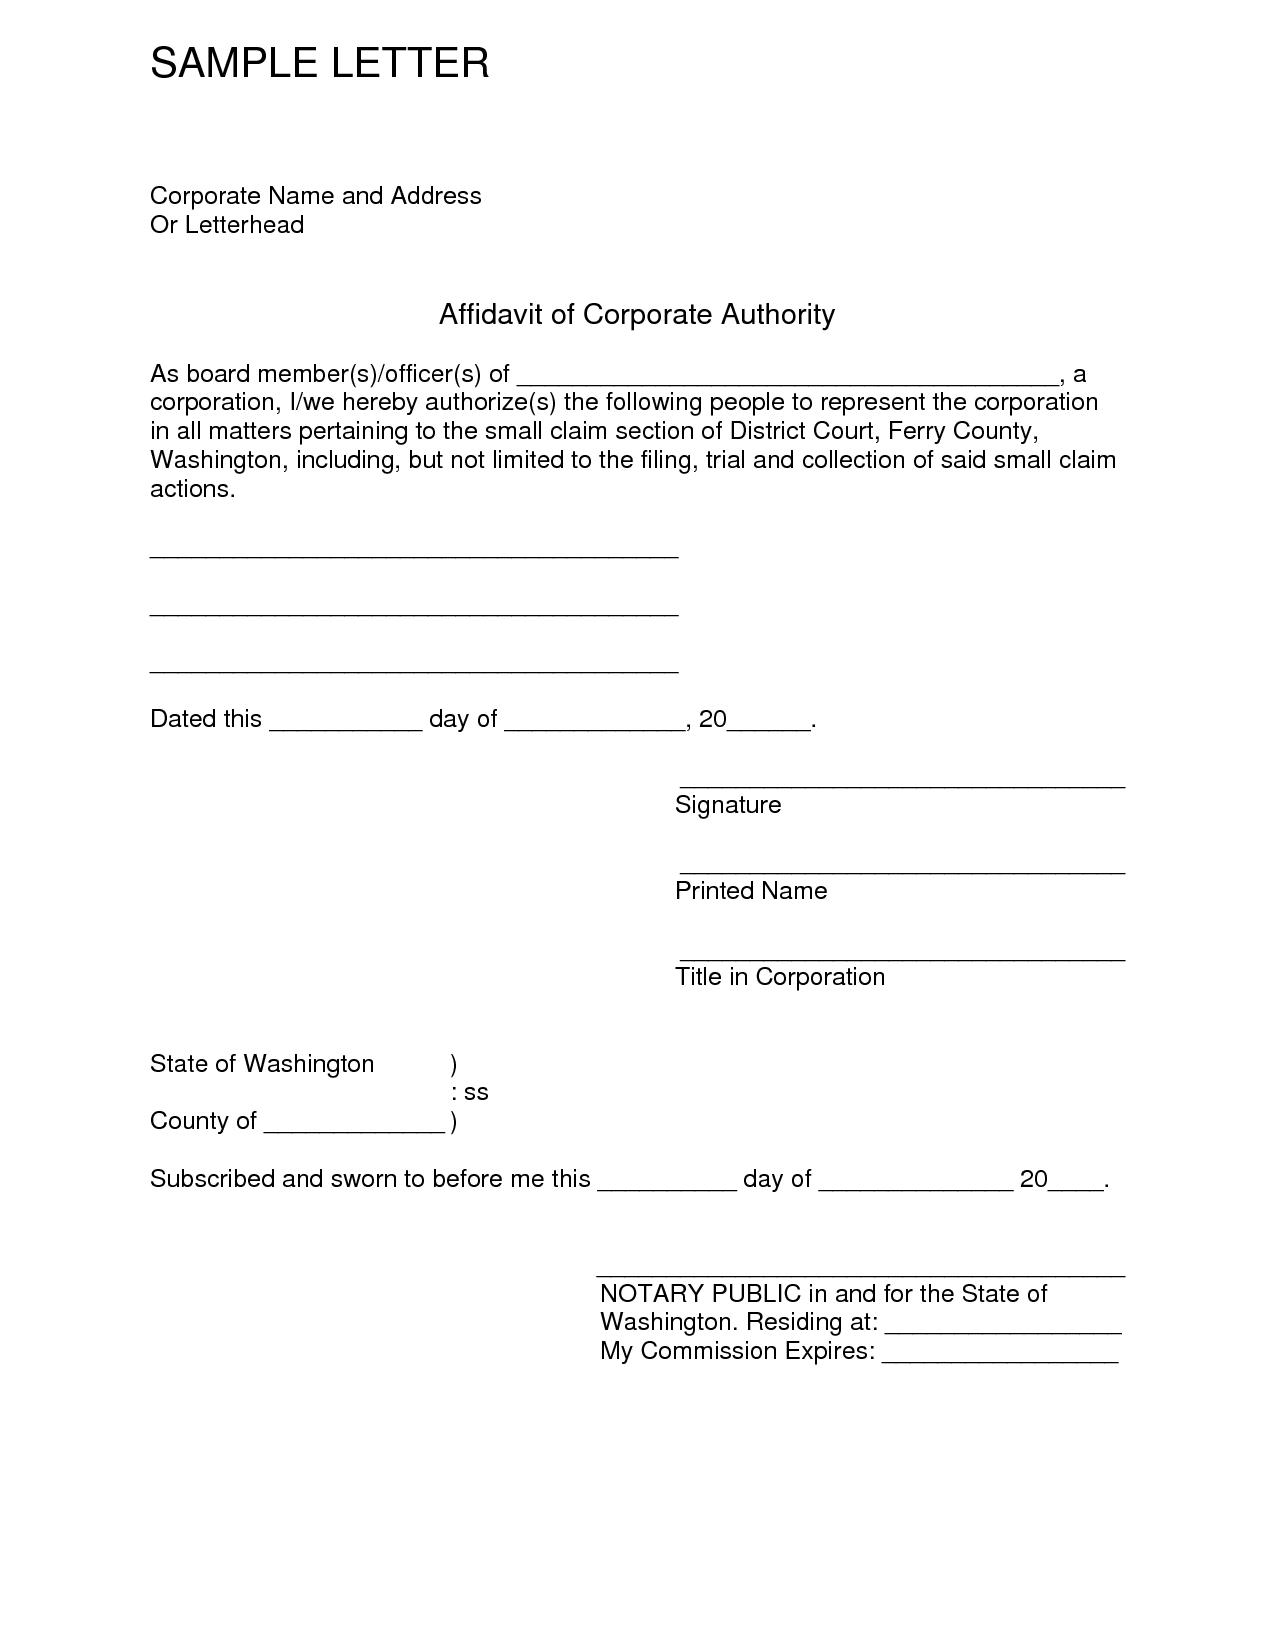 affidavit-of-support-sample-letter-free-printable-documents